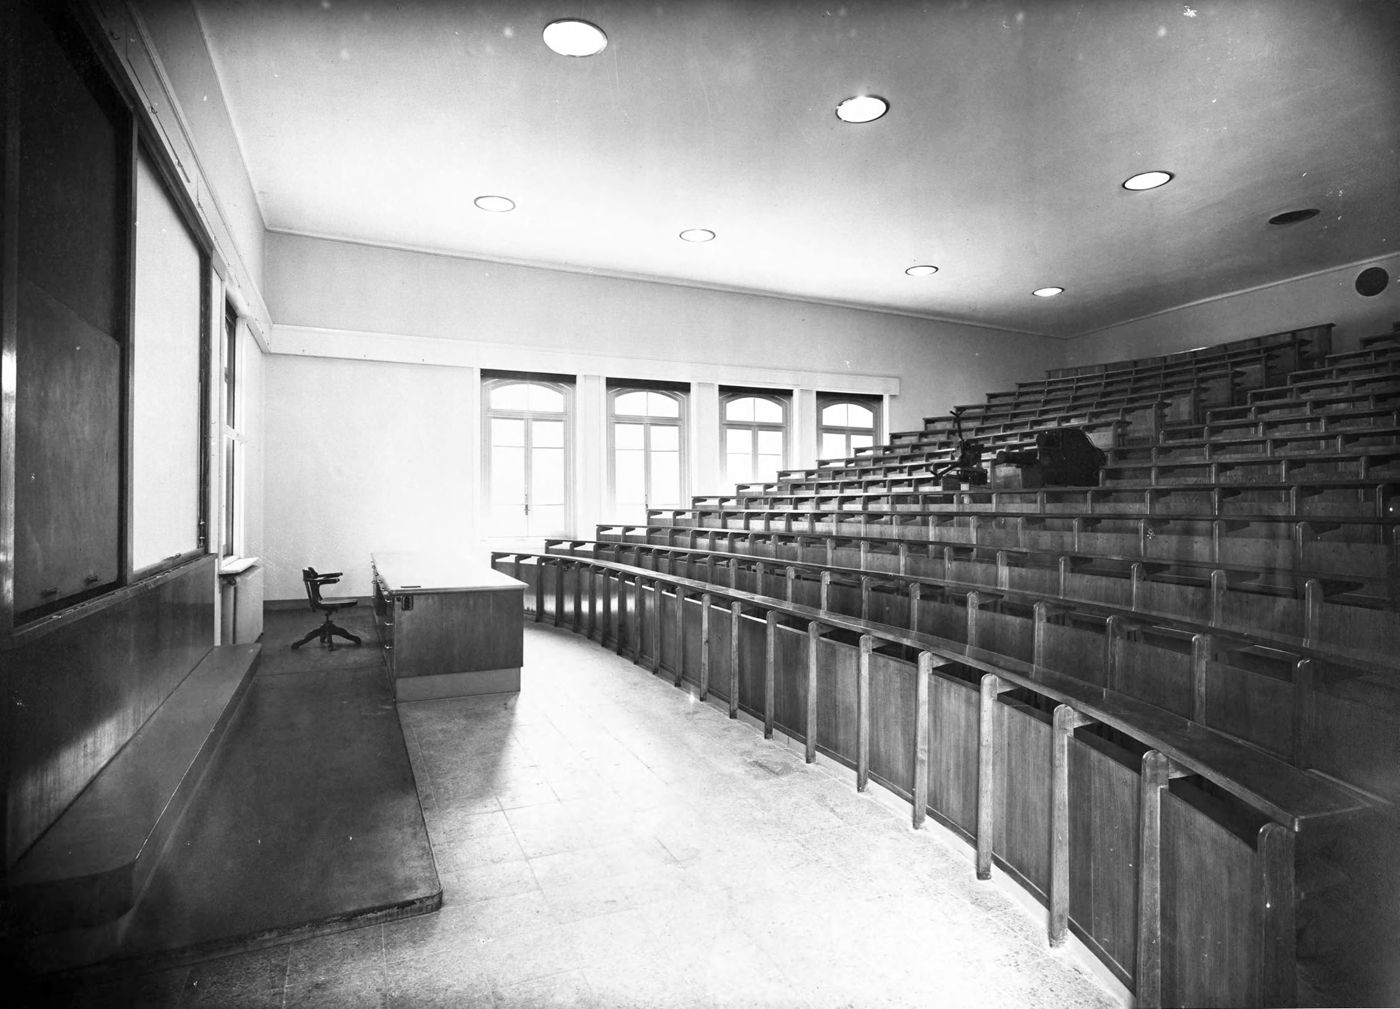 Aula Magna 1 (1930-50)